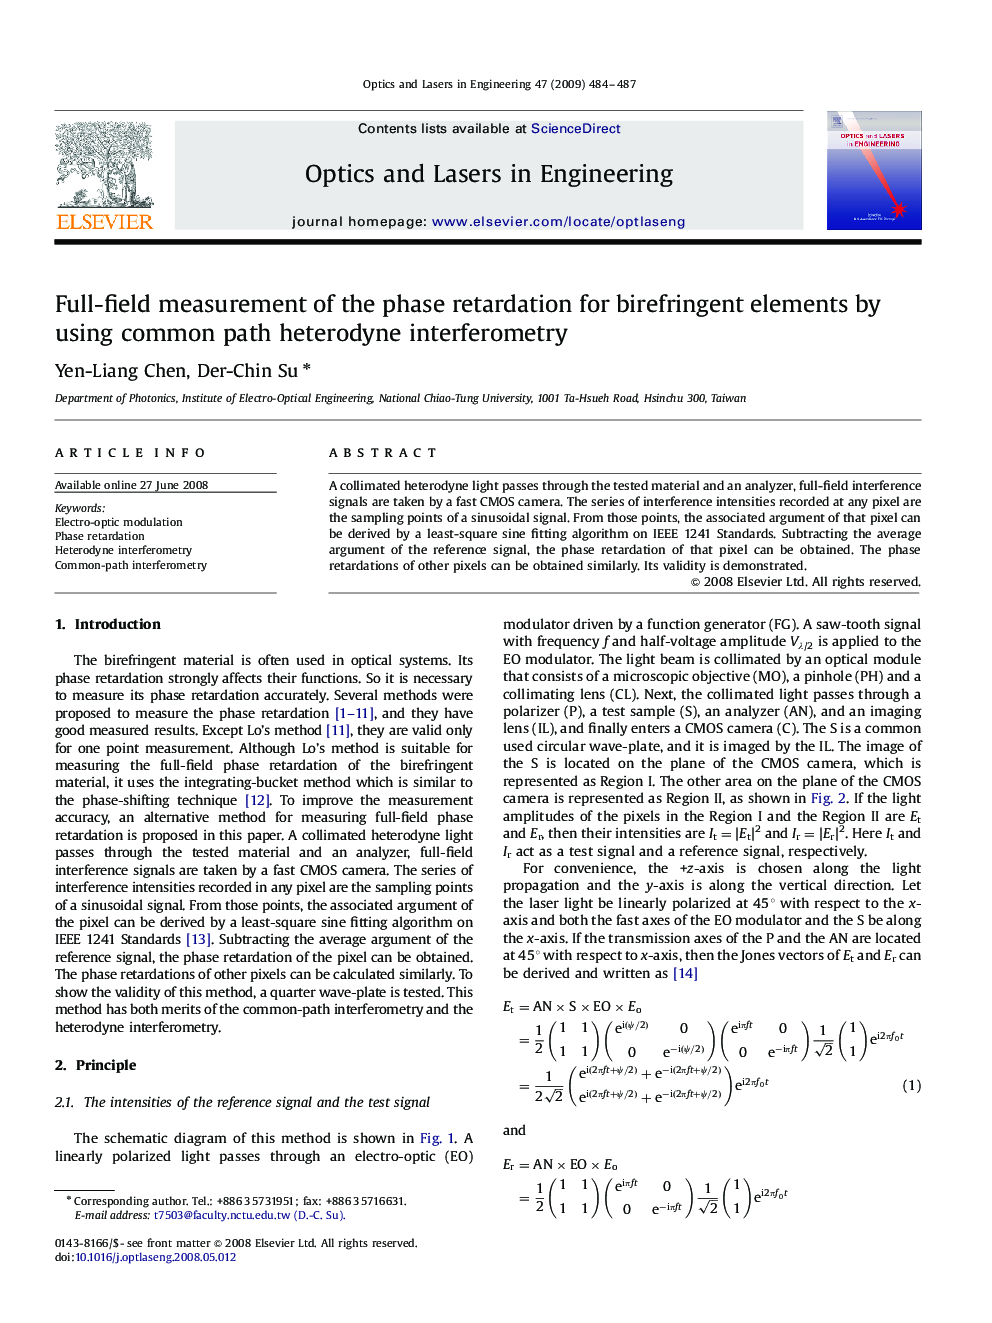 Full-field measurement of the phase retardation for birefringent elements by using common path heterodyne interferometry